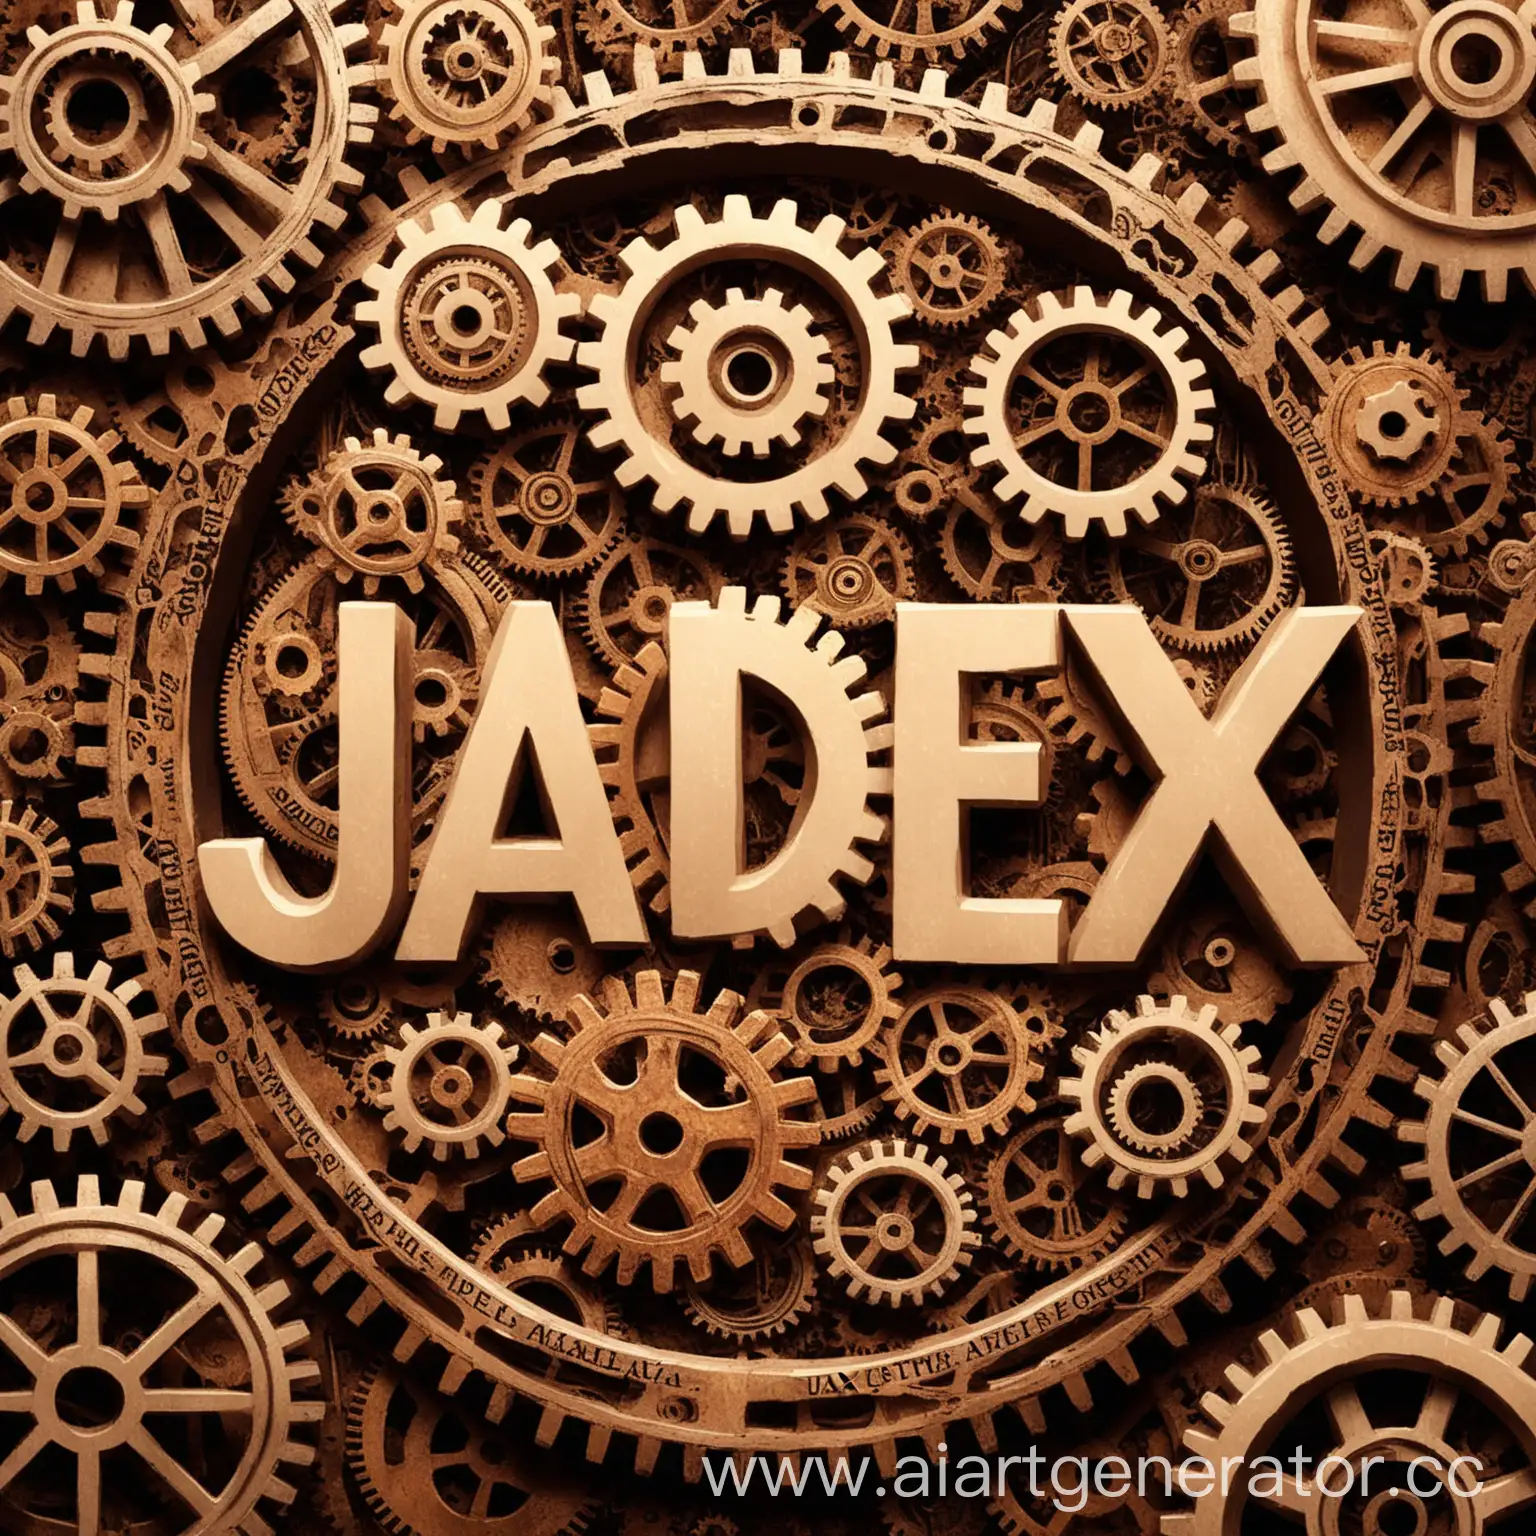 Mechanical-Gears-Surrounding-JADEX-Inscription-in-Rustic-Brown-Tones